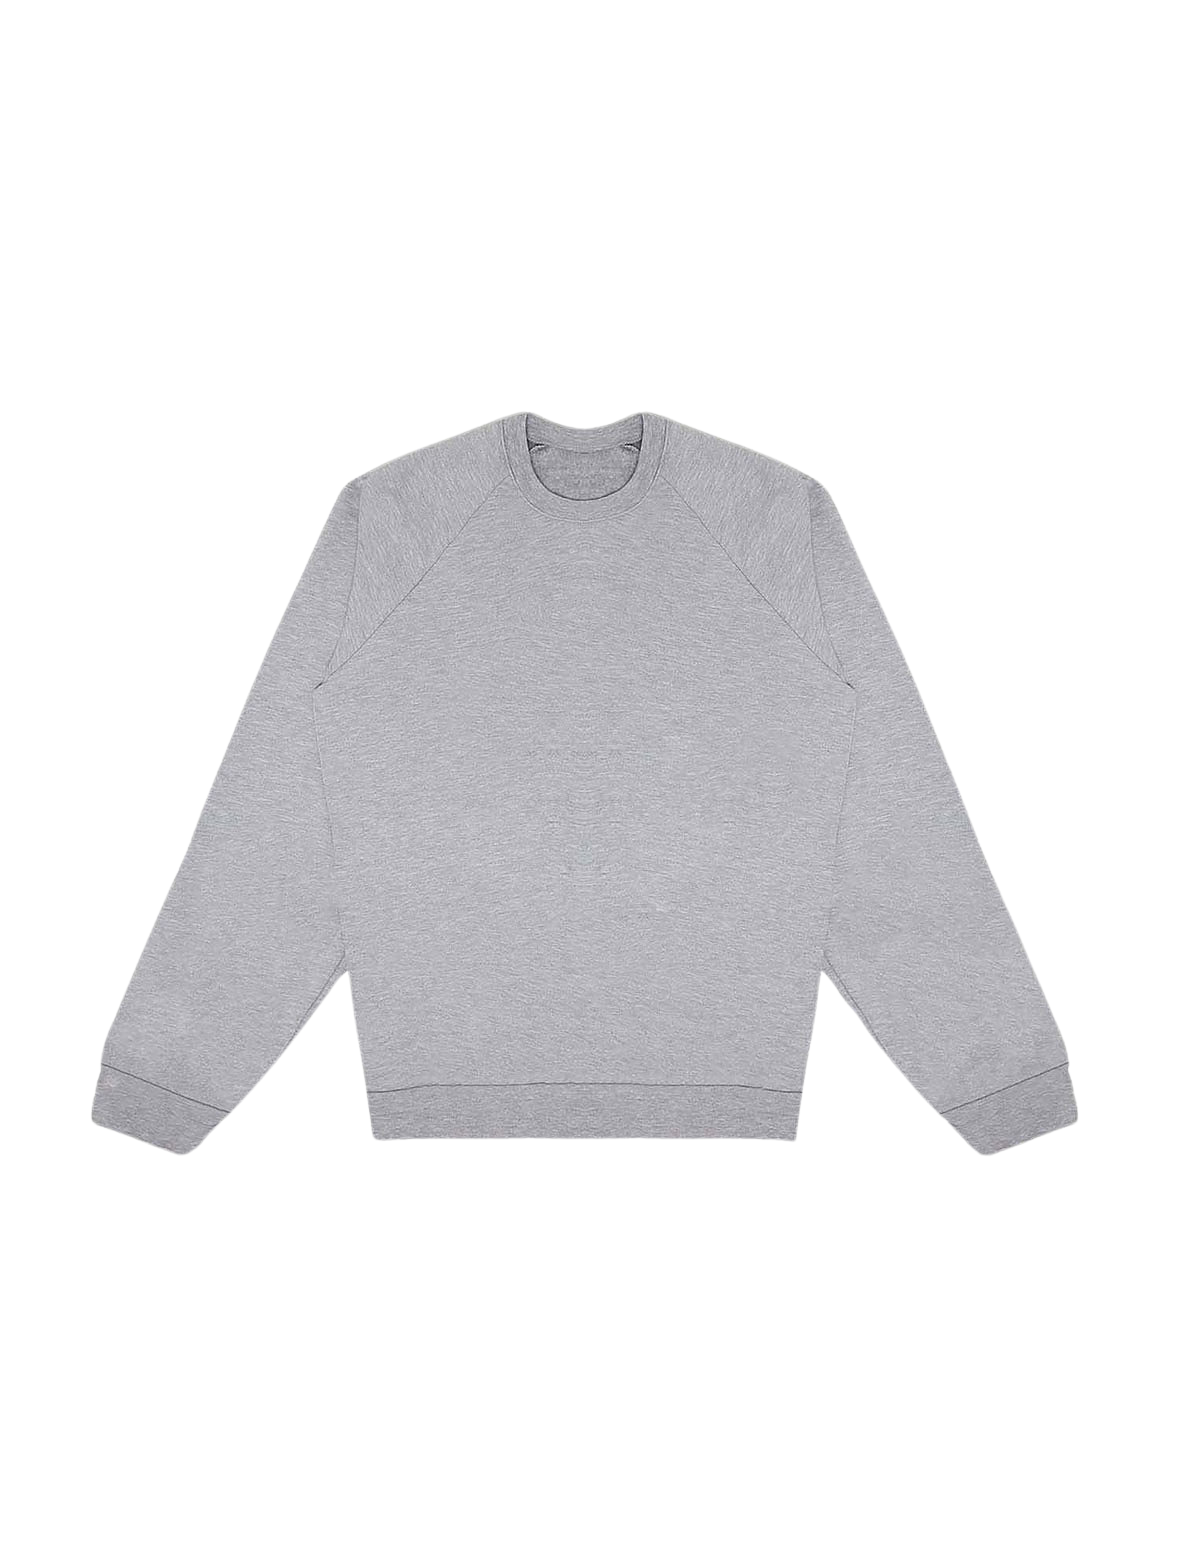 SSUPLY - Original Classic Sweatshirt - Gray - IMP54054FL